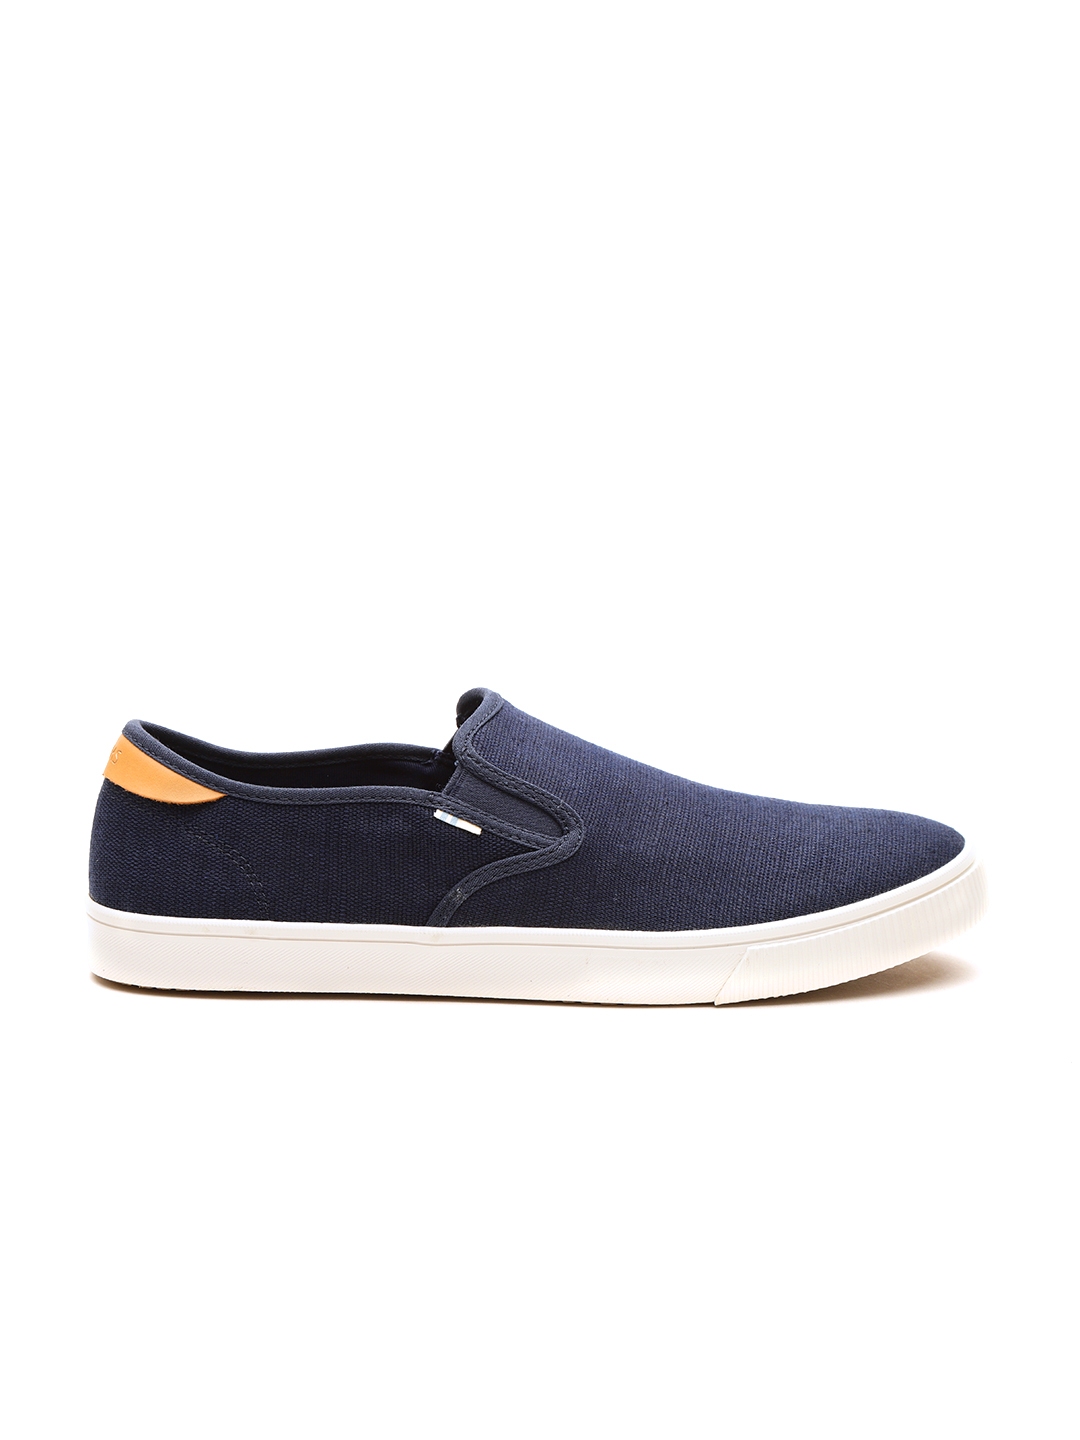 Buy TOMS Men Navy Blue Slip On Sneakers - Casual Shoes for Men 9557157 ...